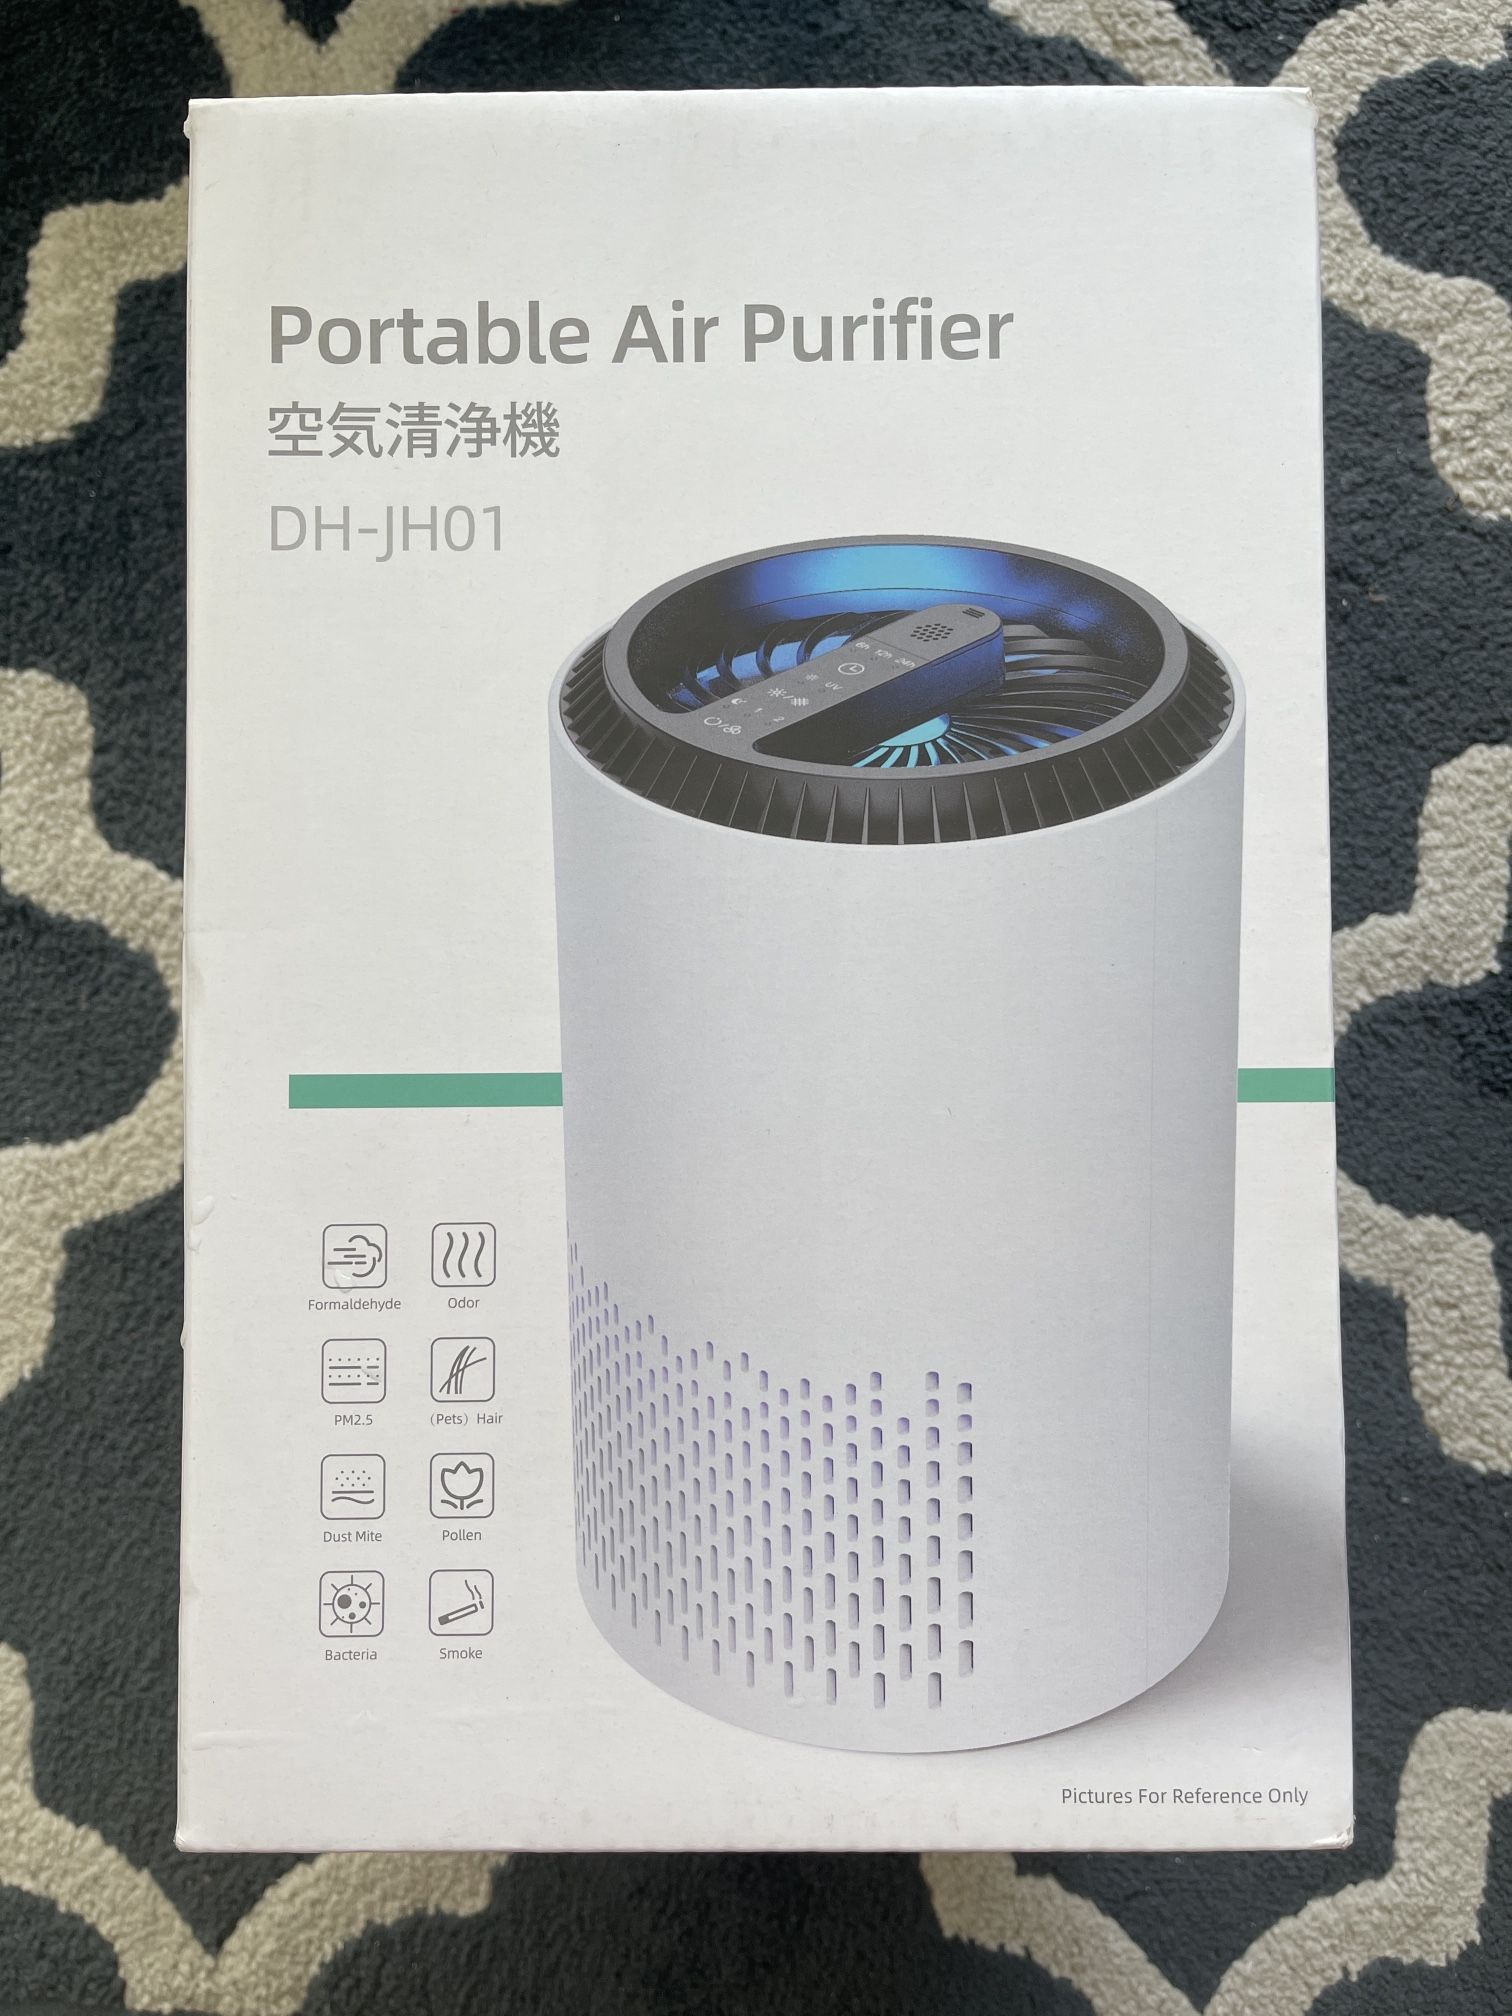 Portable Air Purifier - Brand New In Box.